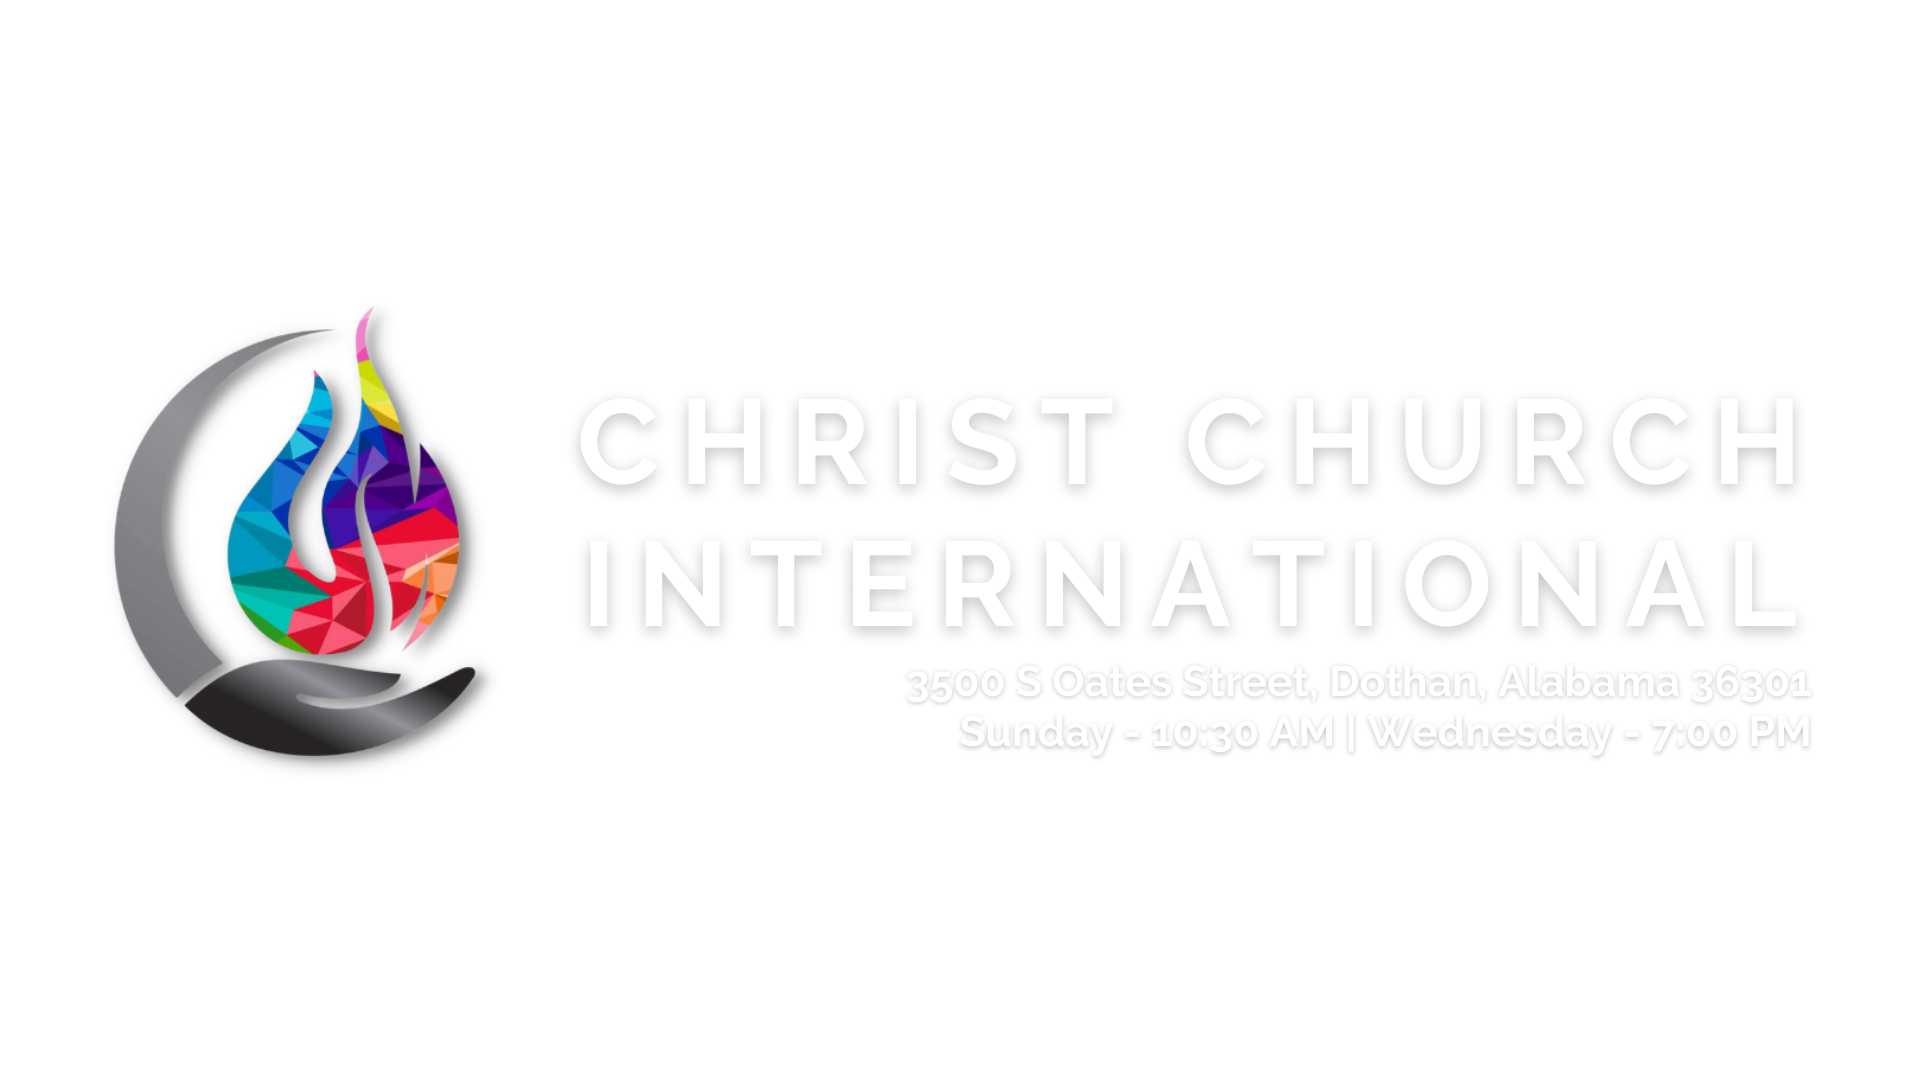 CHRIST CHURCH INTERNATIONAL